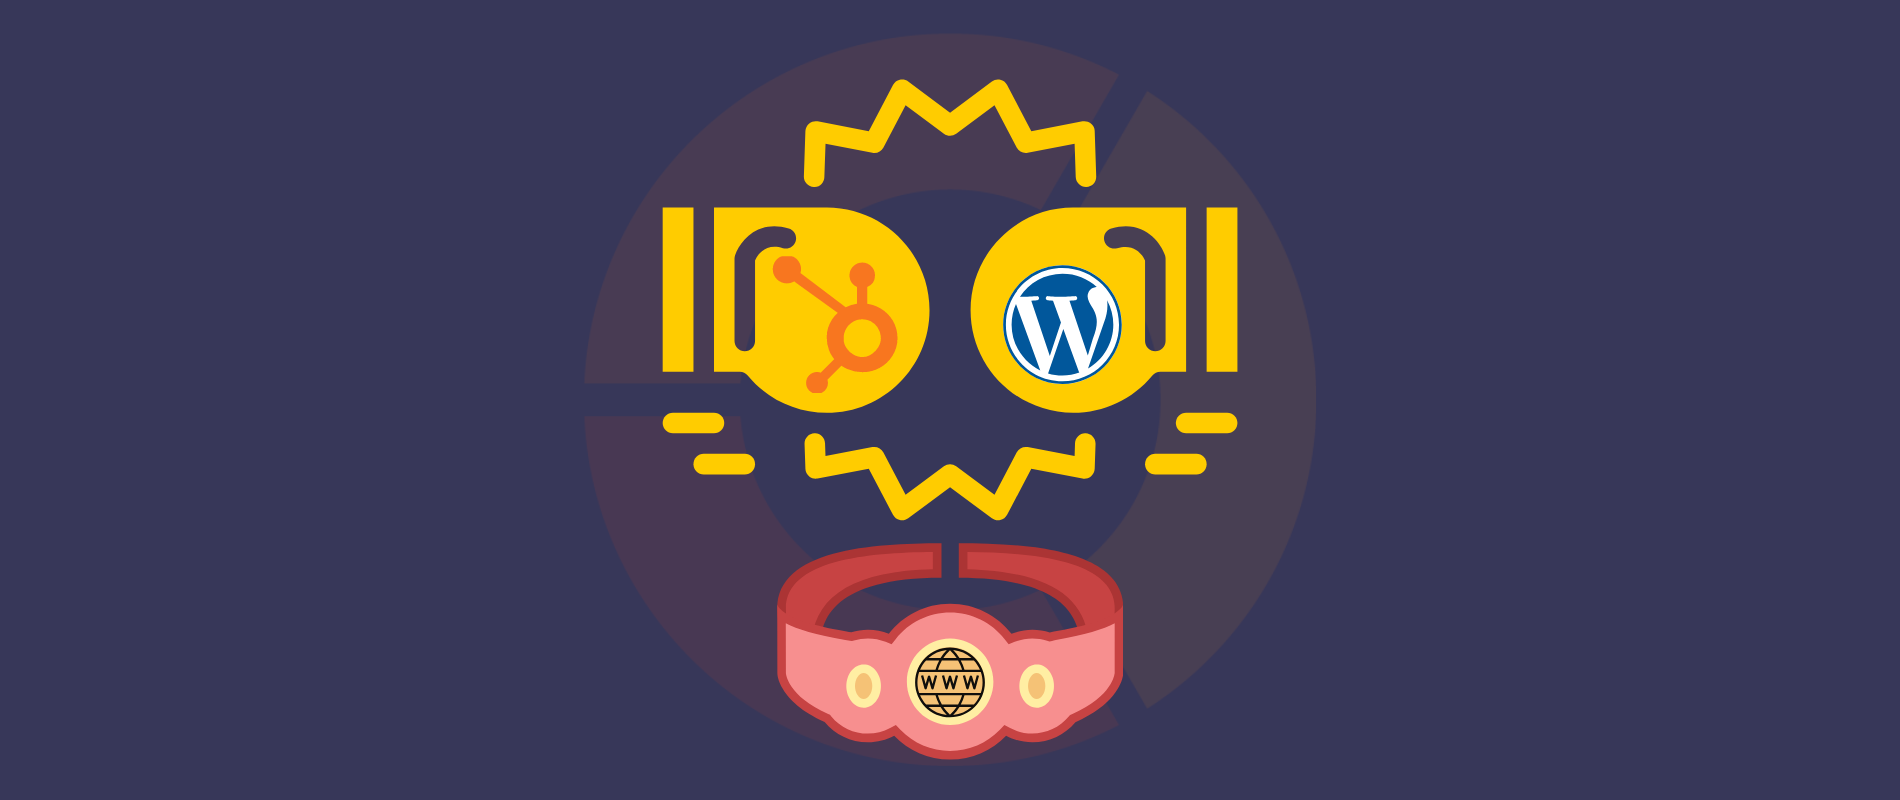 Should you consider HubSpot over Wordpress as your website platform?